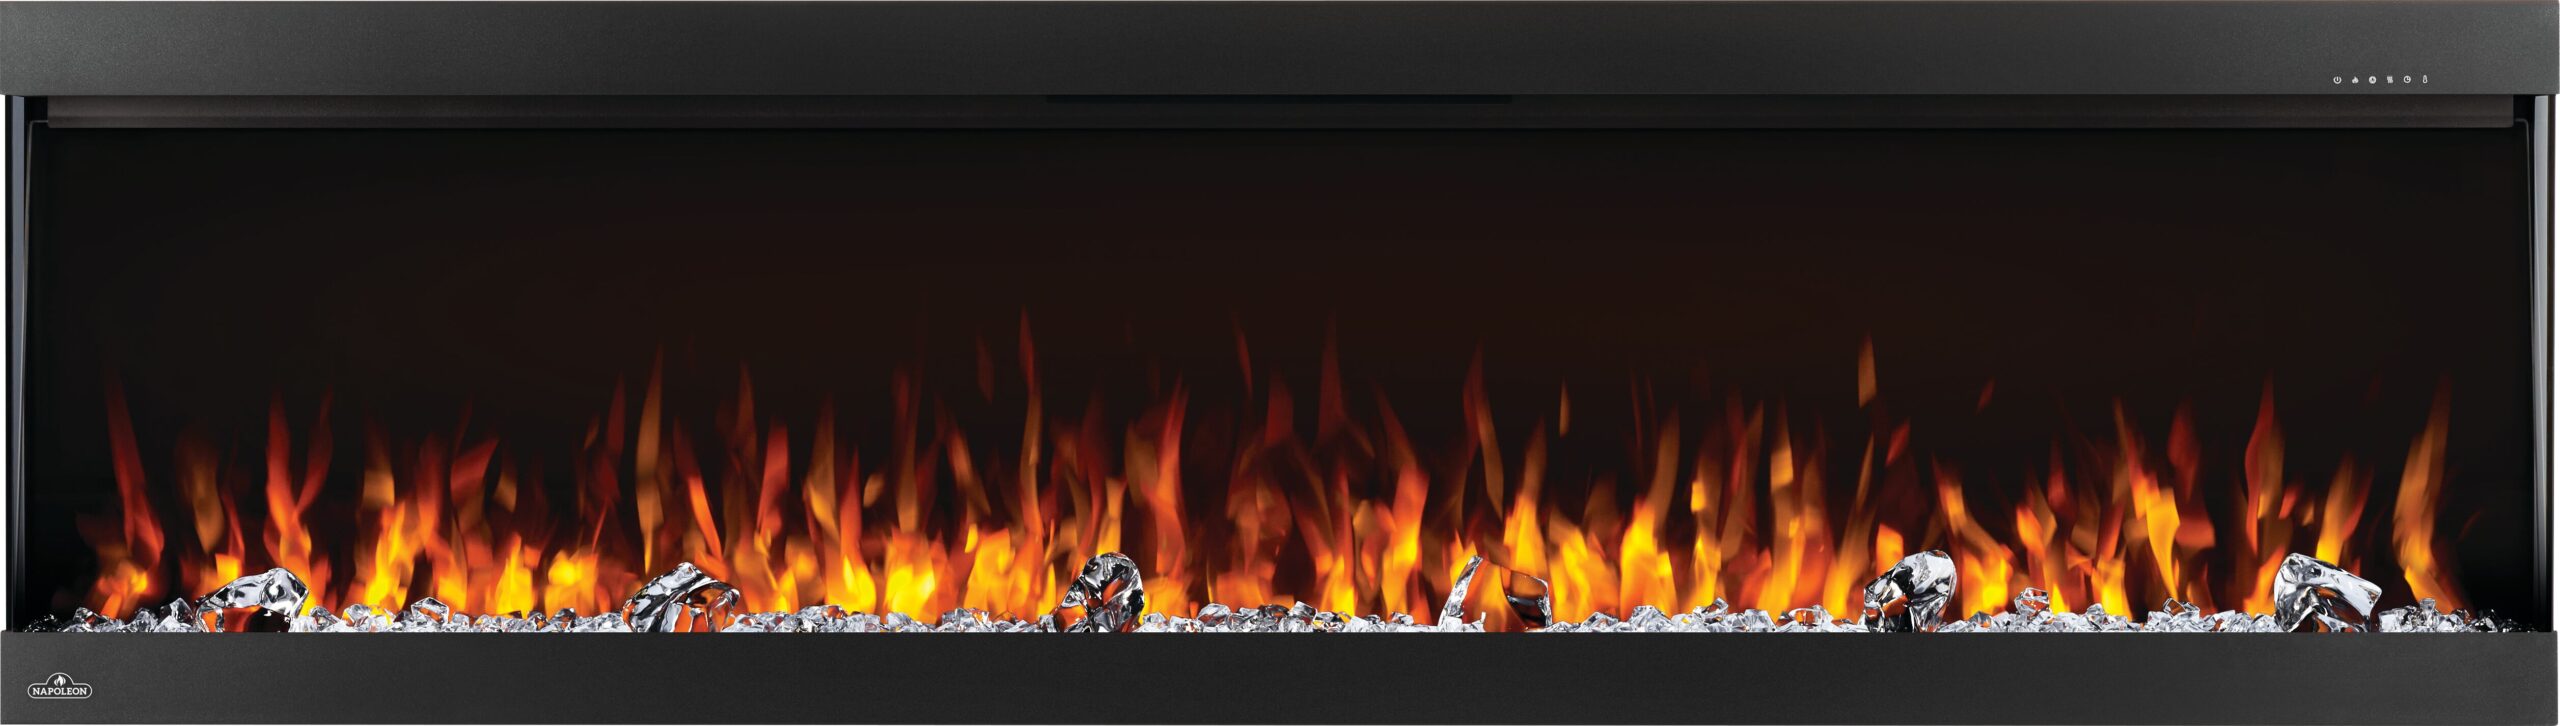 NAPOLEON TRIVISTA PICTURA NEFL60H-3SV WITH CRYSTALS AND ORANGE FLAMES